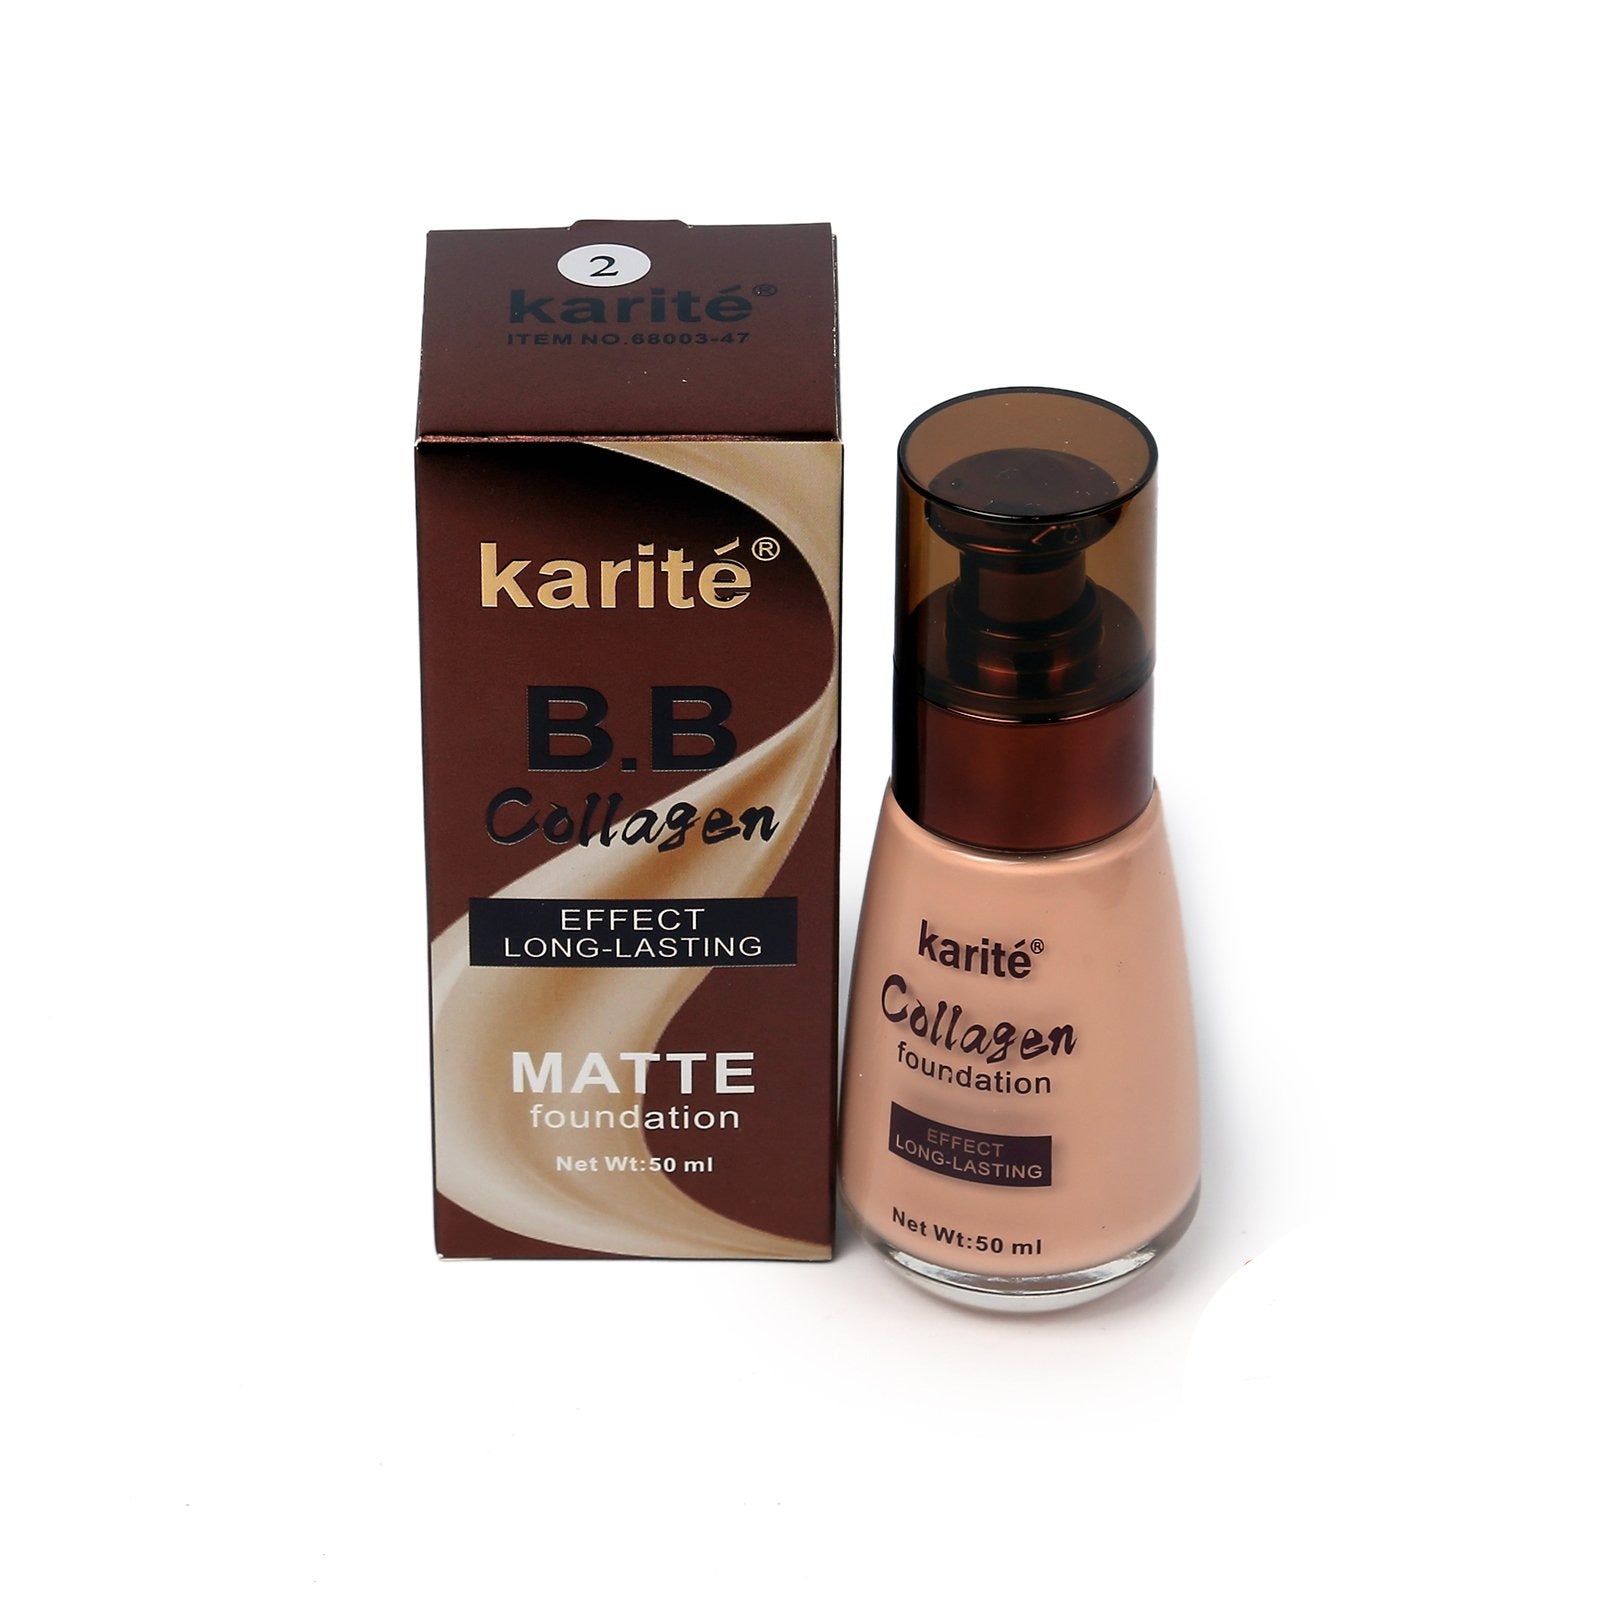 Karite Long Lasting Matte Foundation BB Collagen Shade 2 50ml freeshipping - lasertag.pk